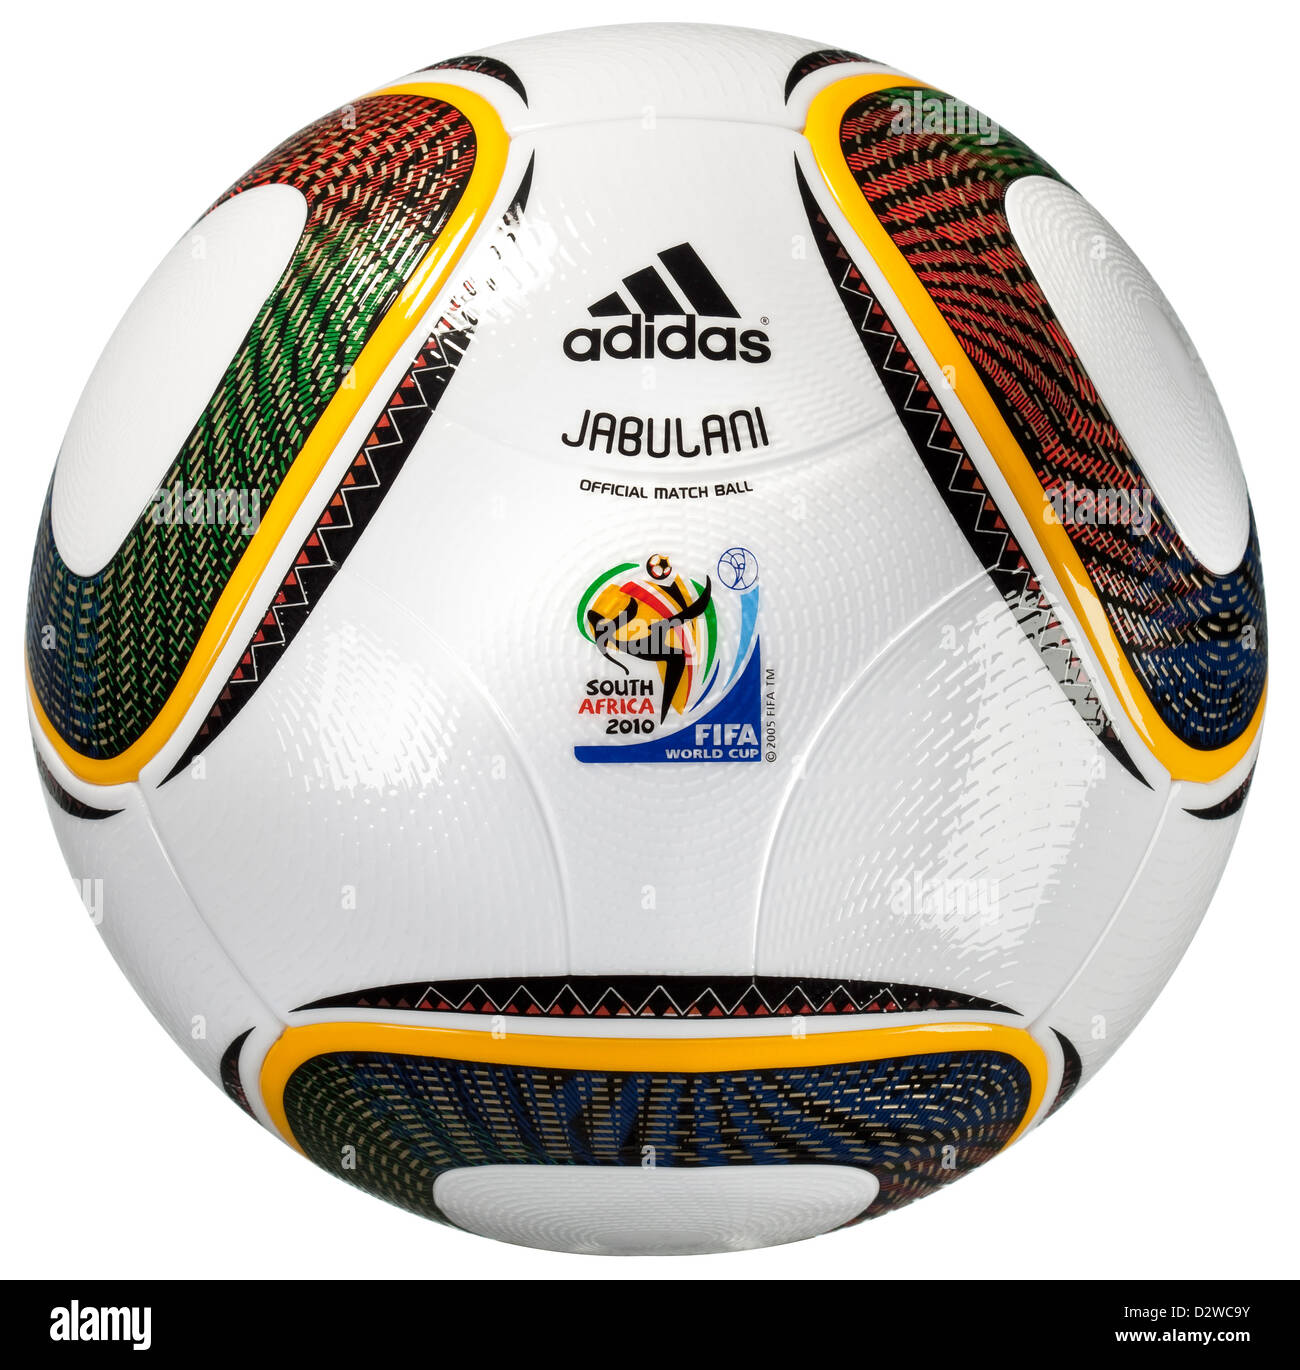 Deutschland, Adidas JABULANI Offizieller Spielball der FIFA WM 2010 Stockfoto